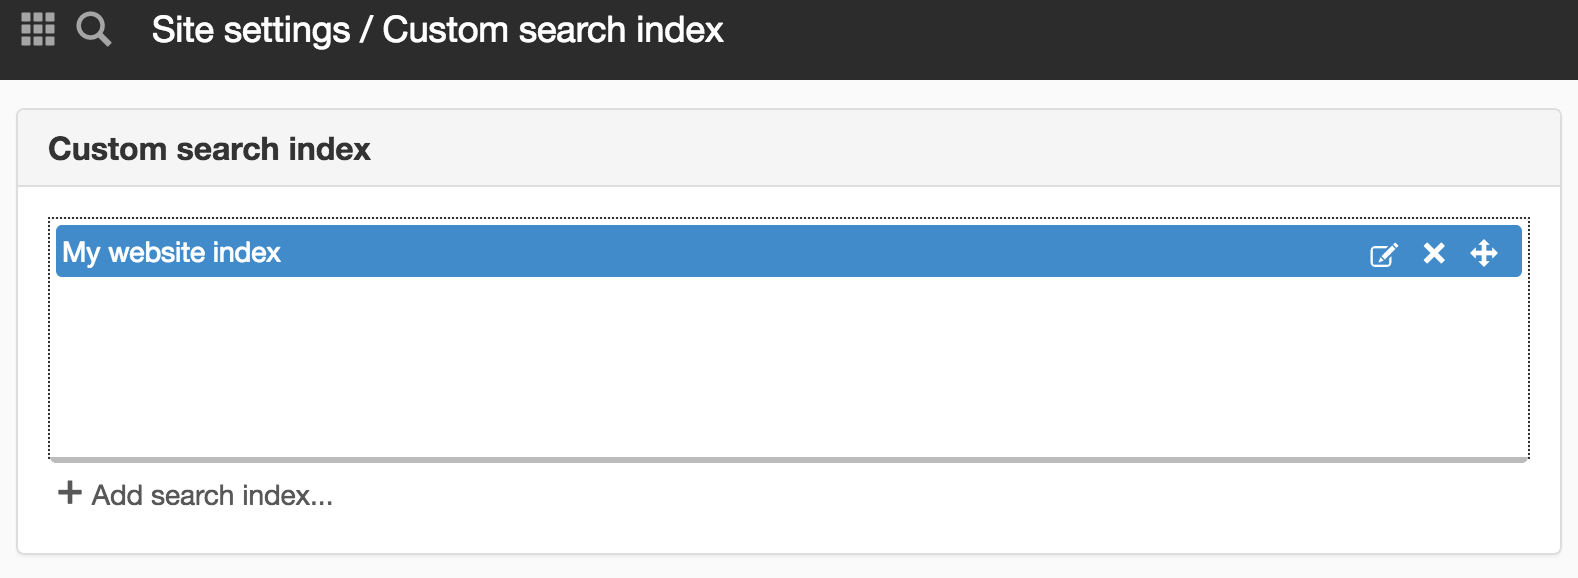 Custom search index